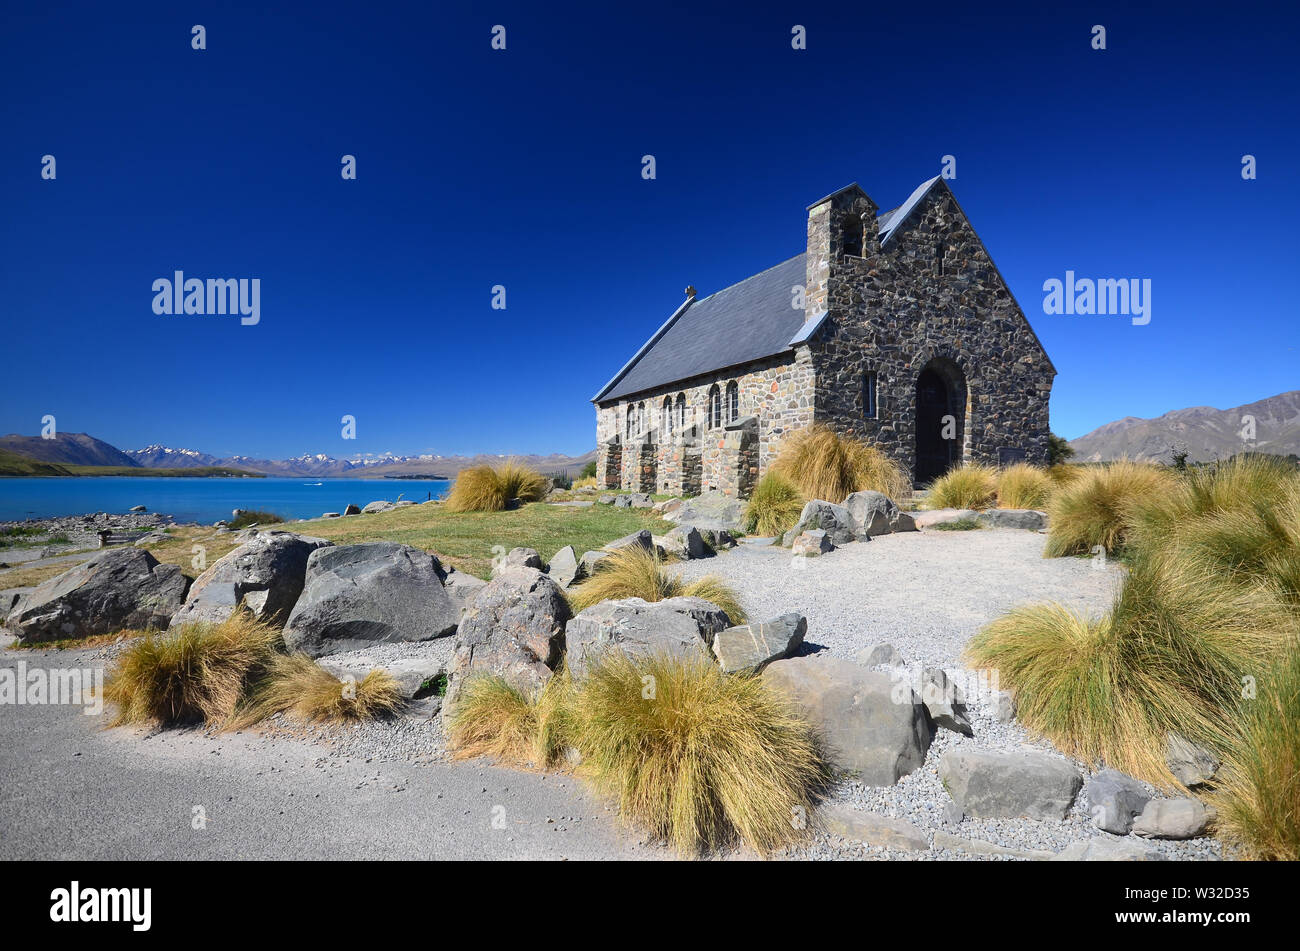 Good Shepherd's Chapel, Lake Tekapo, Neuseeland Stockfoto